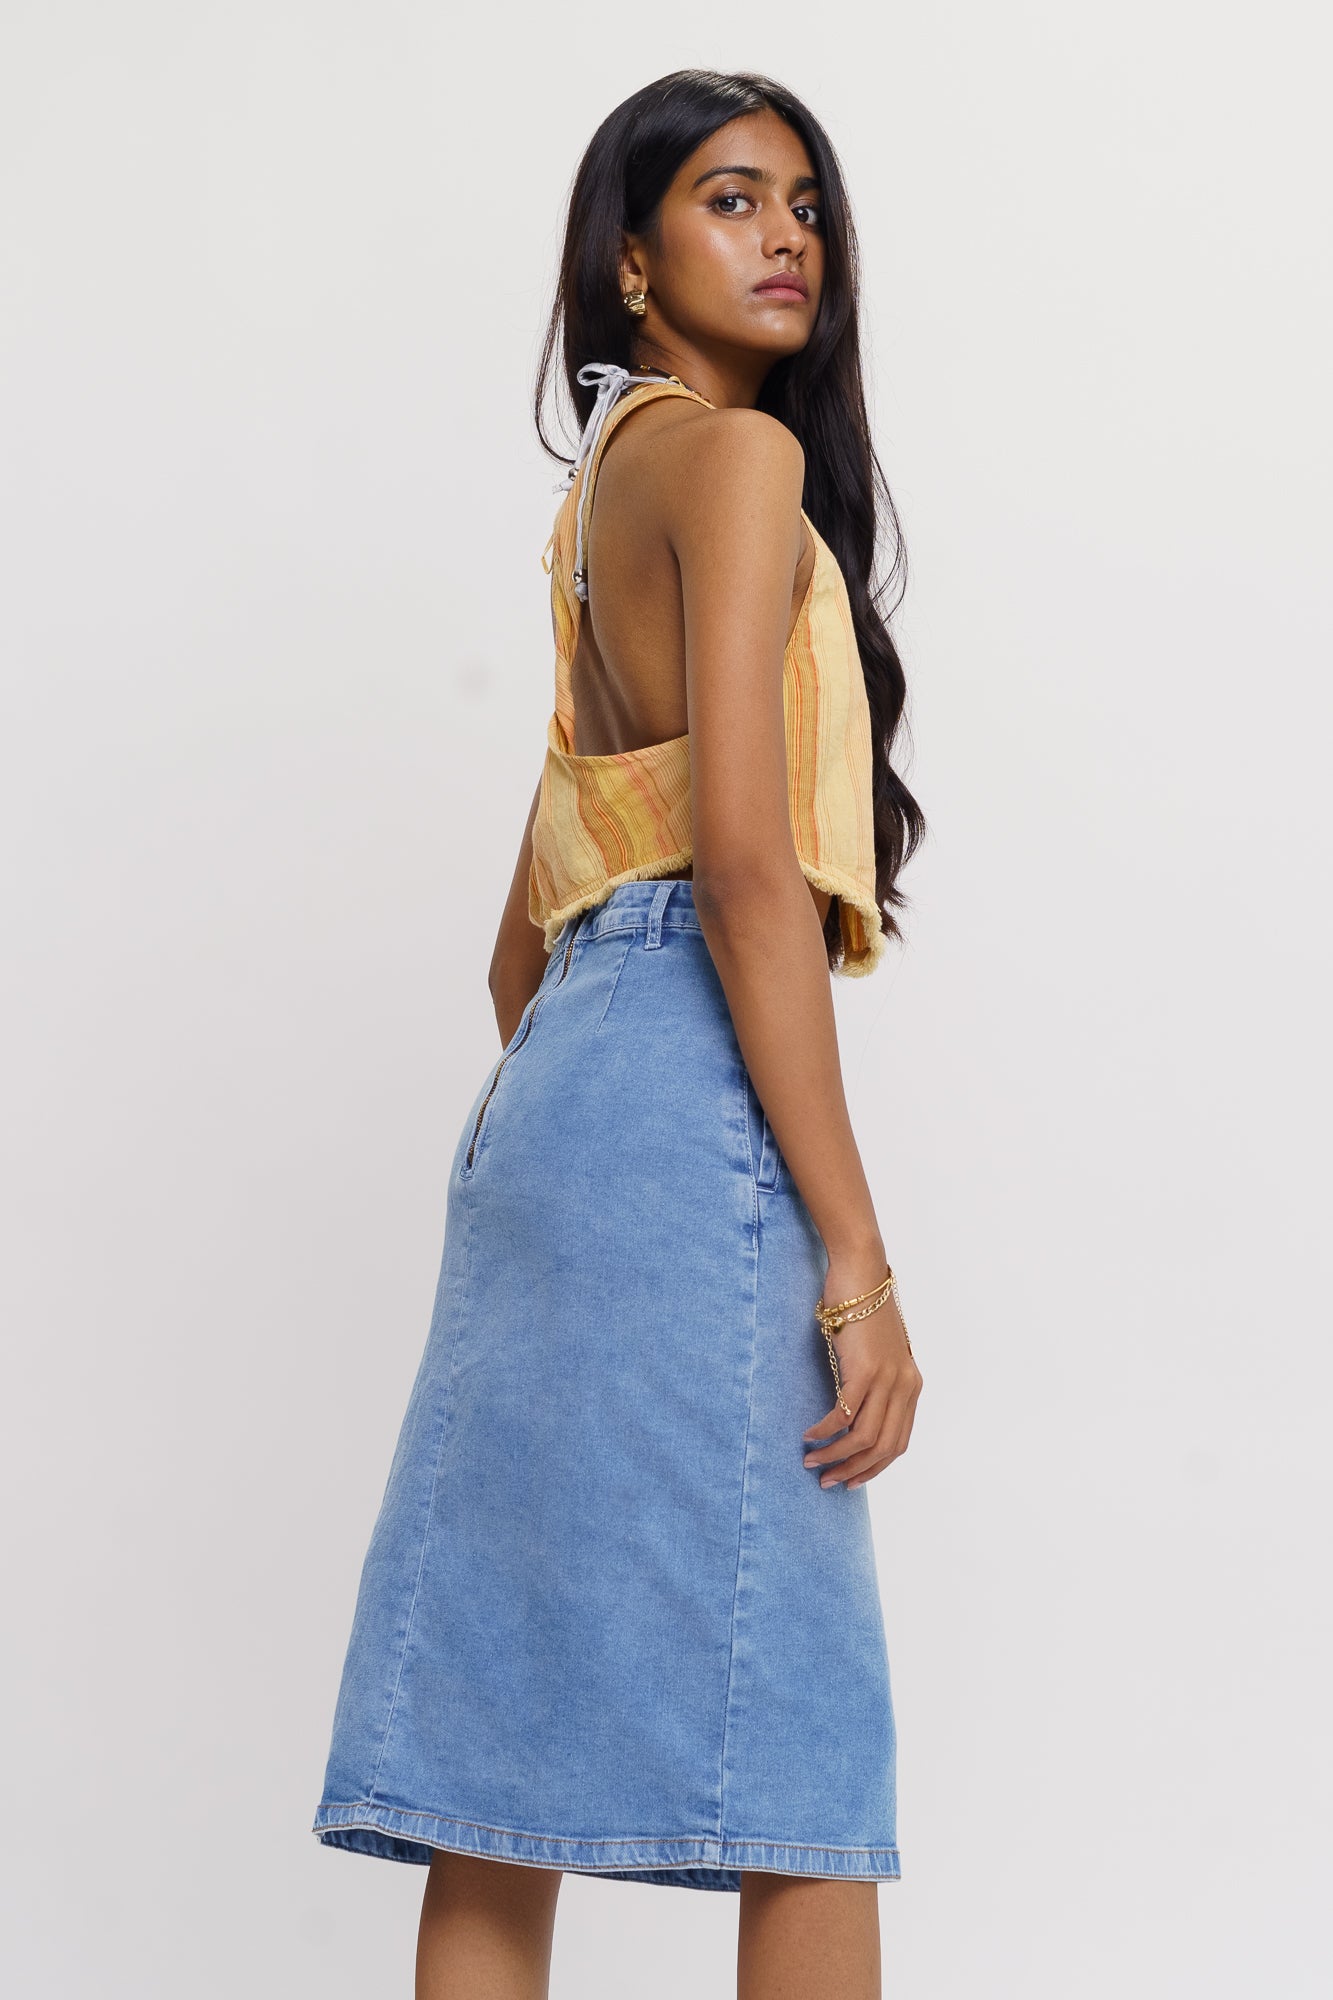 High Waisted Denim Skirt | Button Up Style